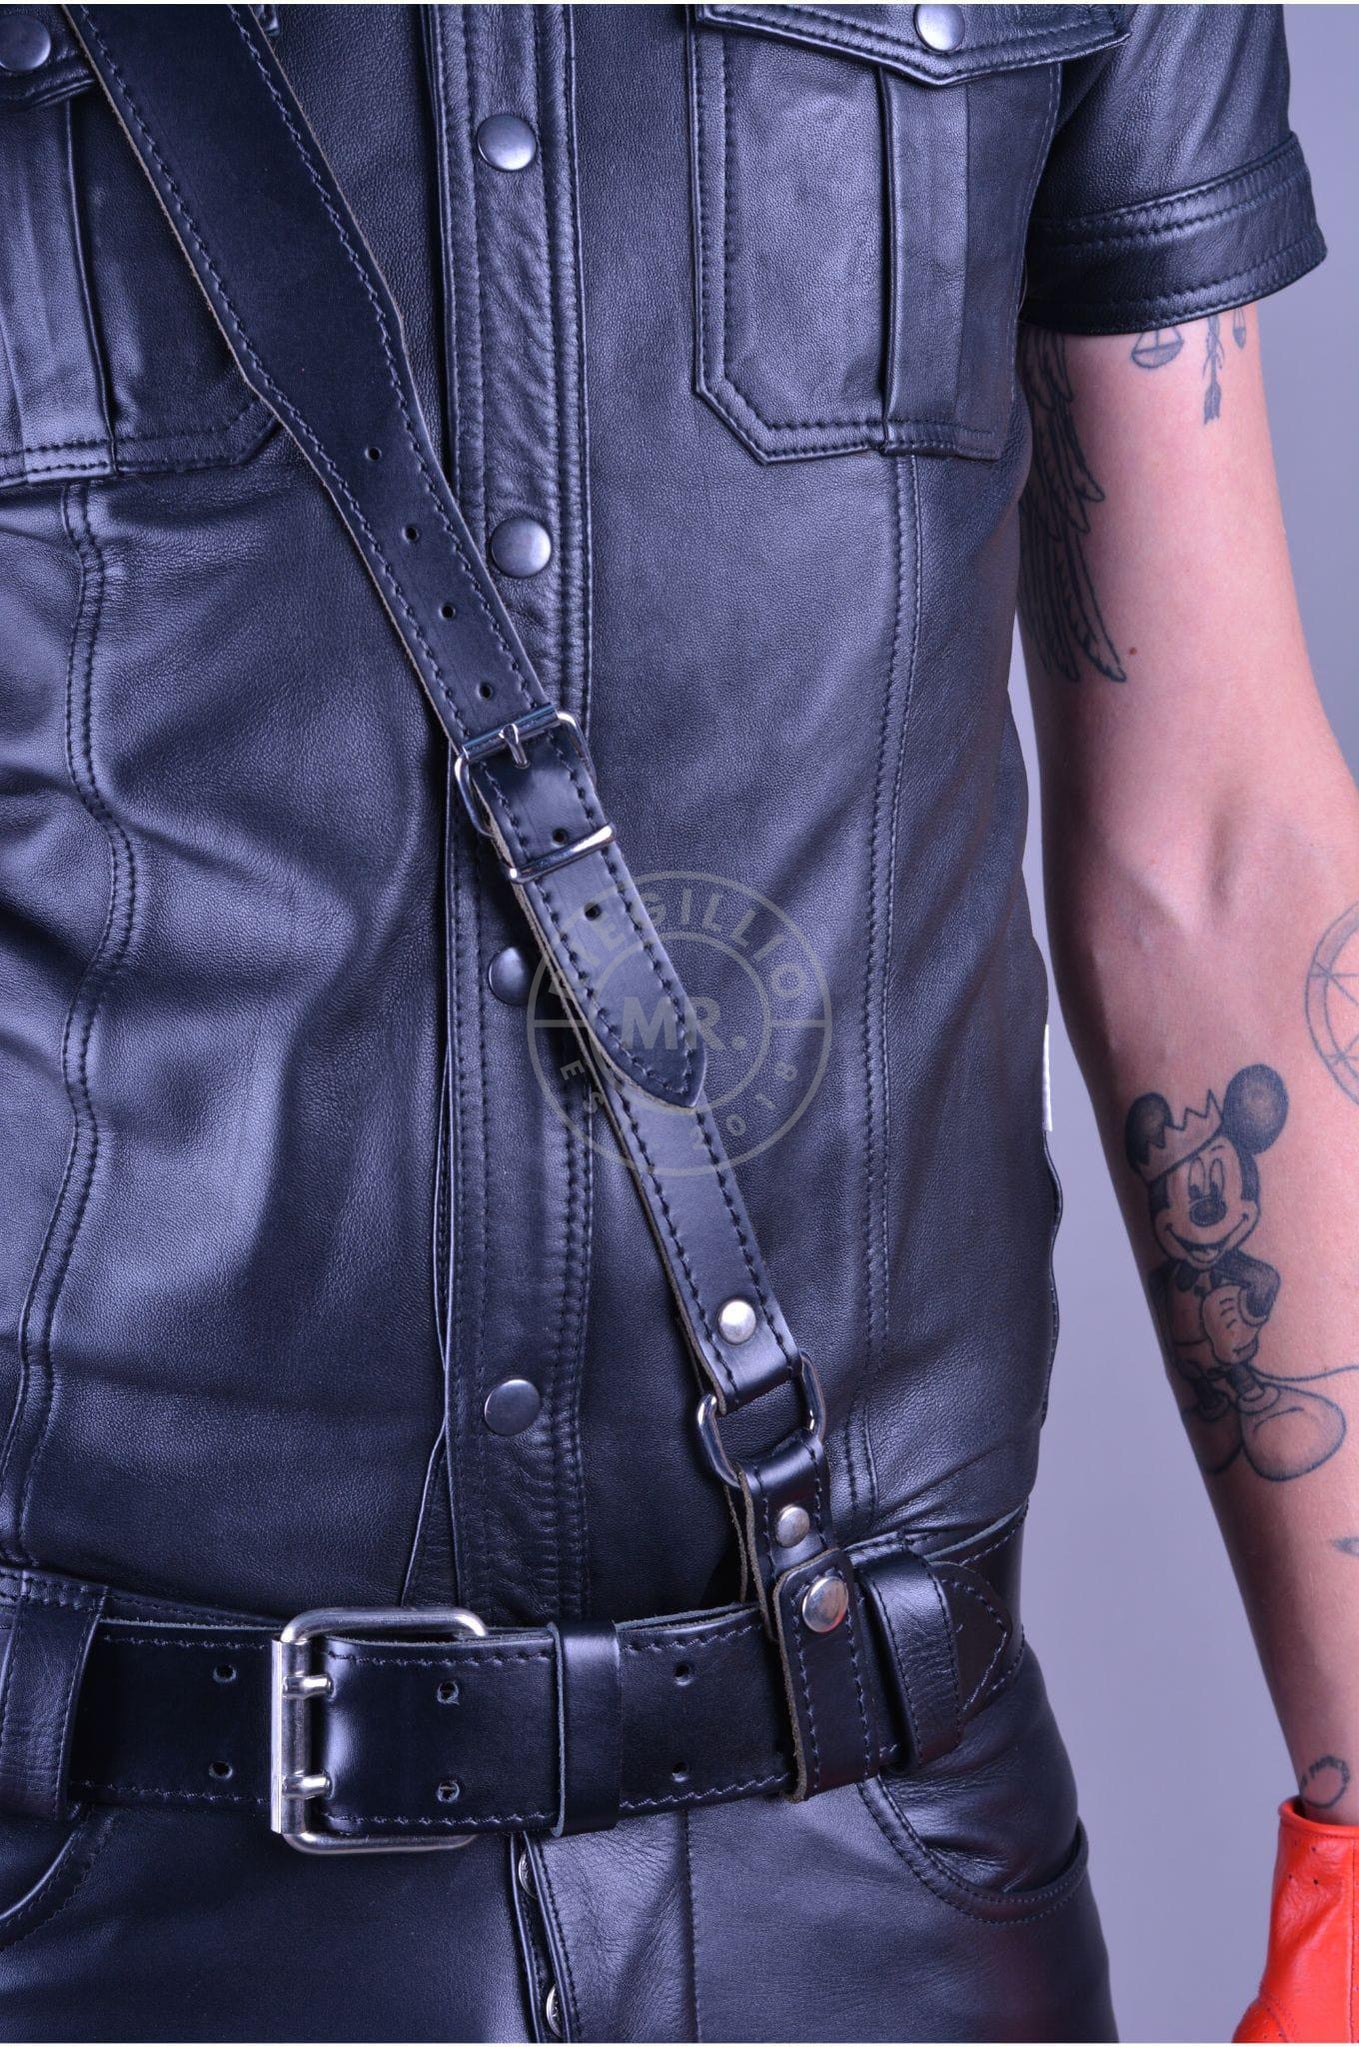 Mister B Leather Sam Browne Belt Stitched - Black-at MR. Riegillio